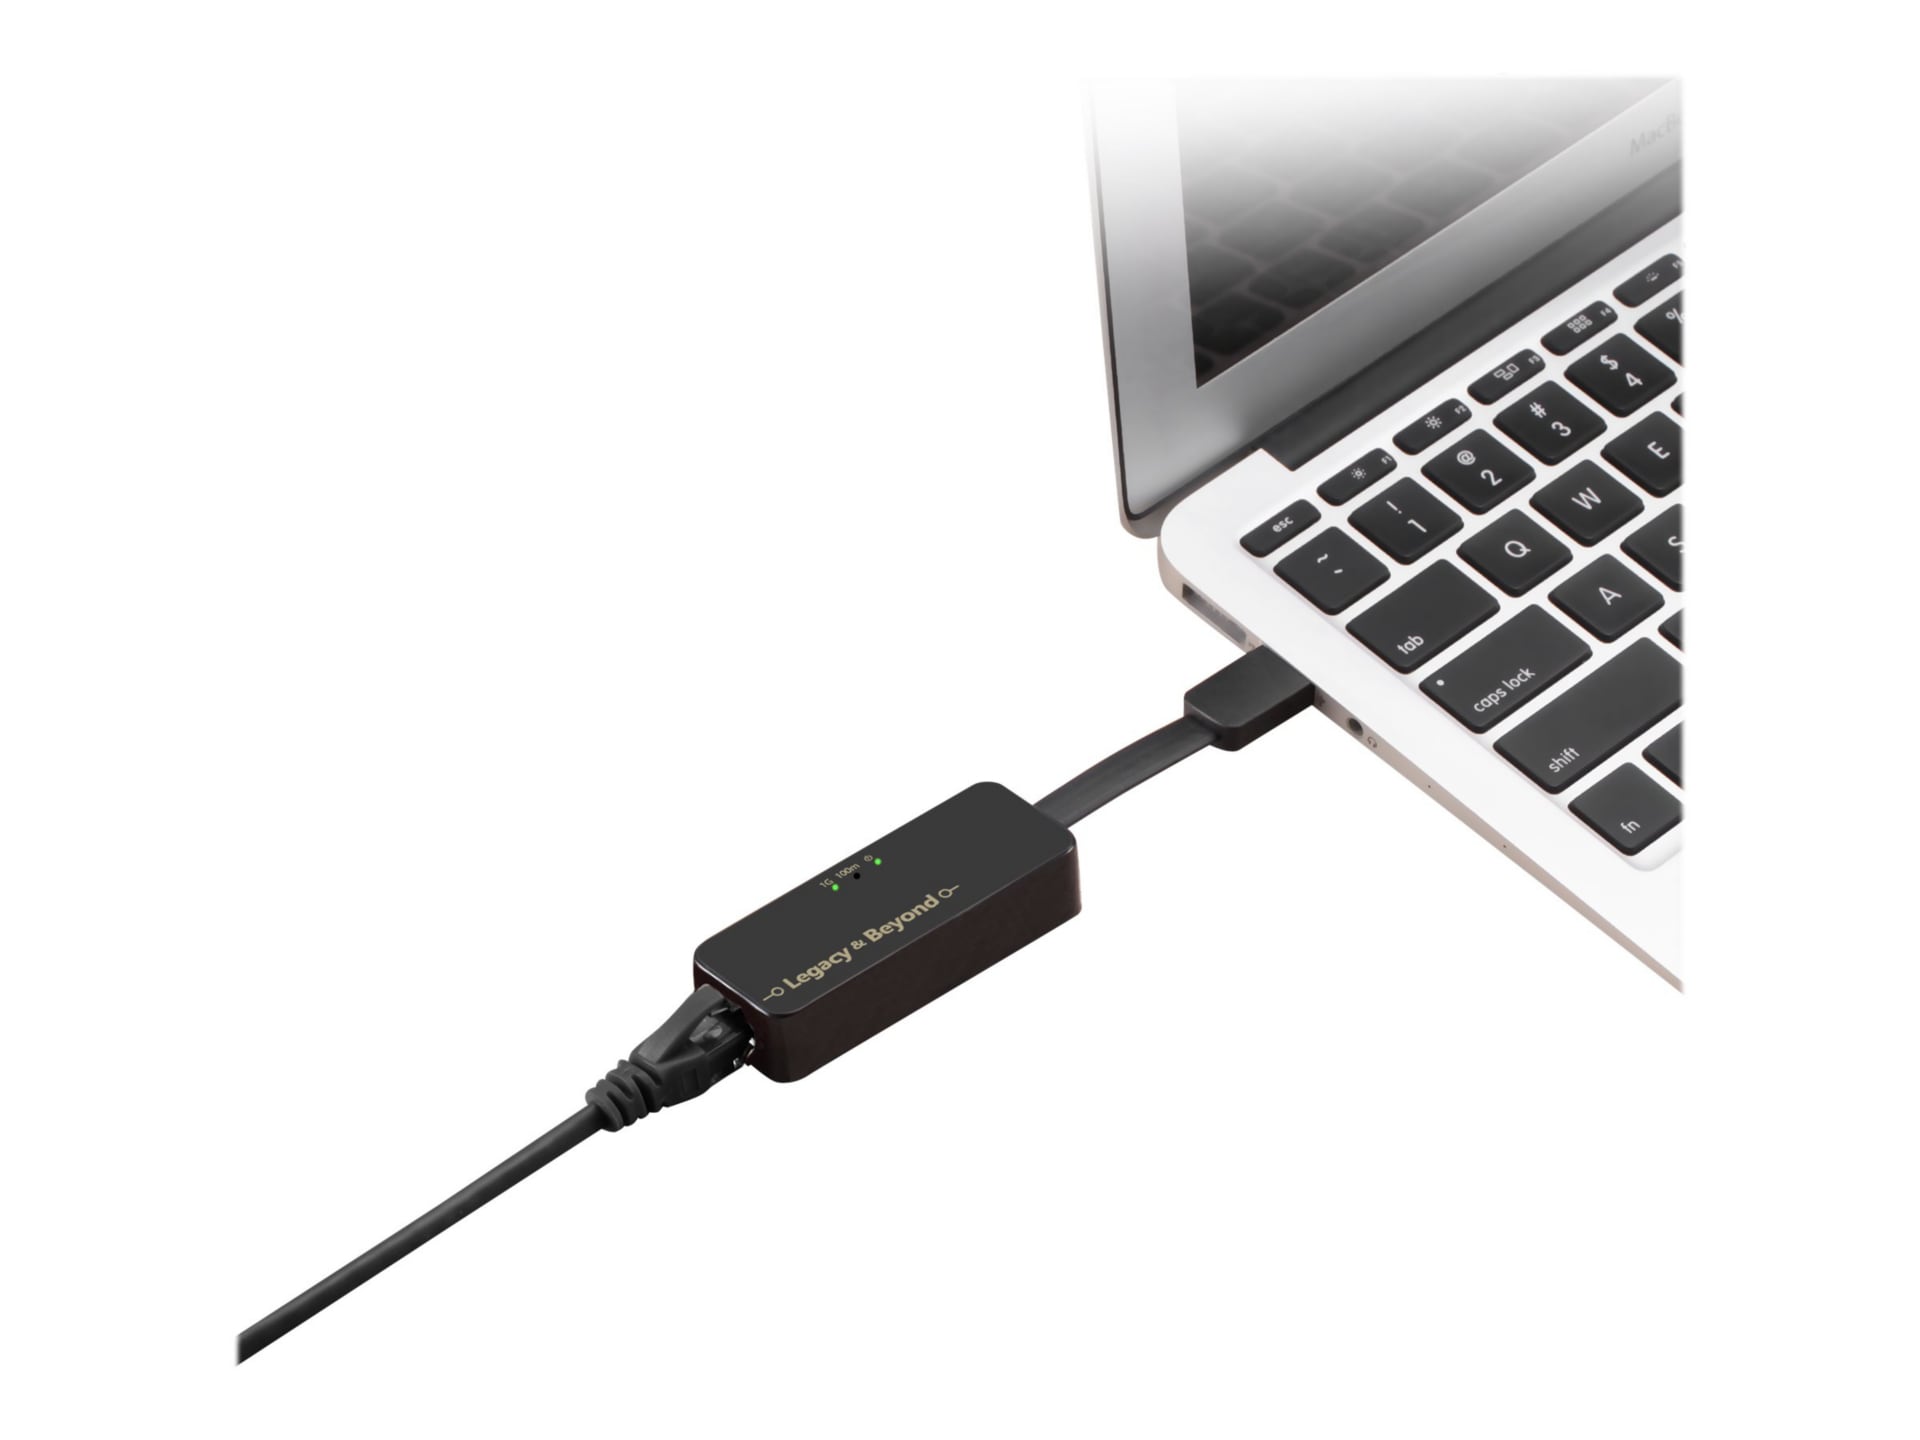 SIIG Portable USB 3.0 Gigabit Ethernet Adapter - network adapter - USB 3.0